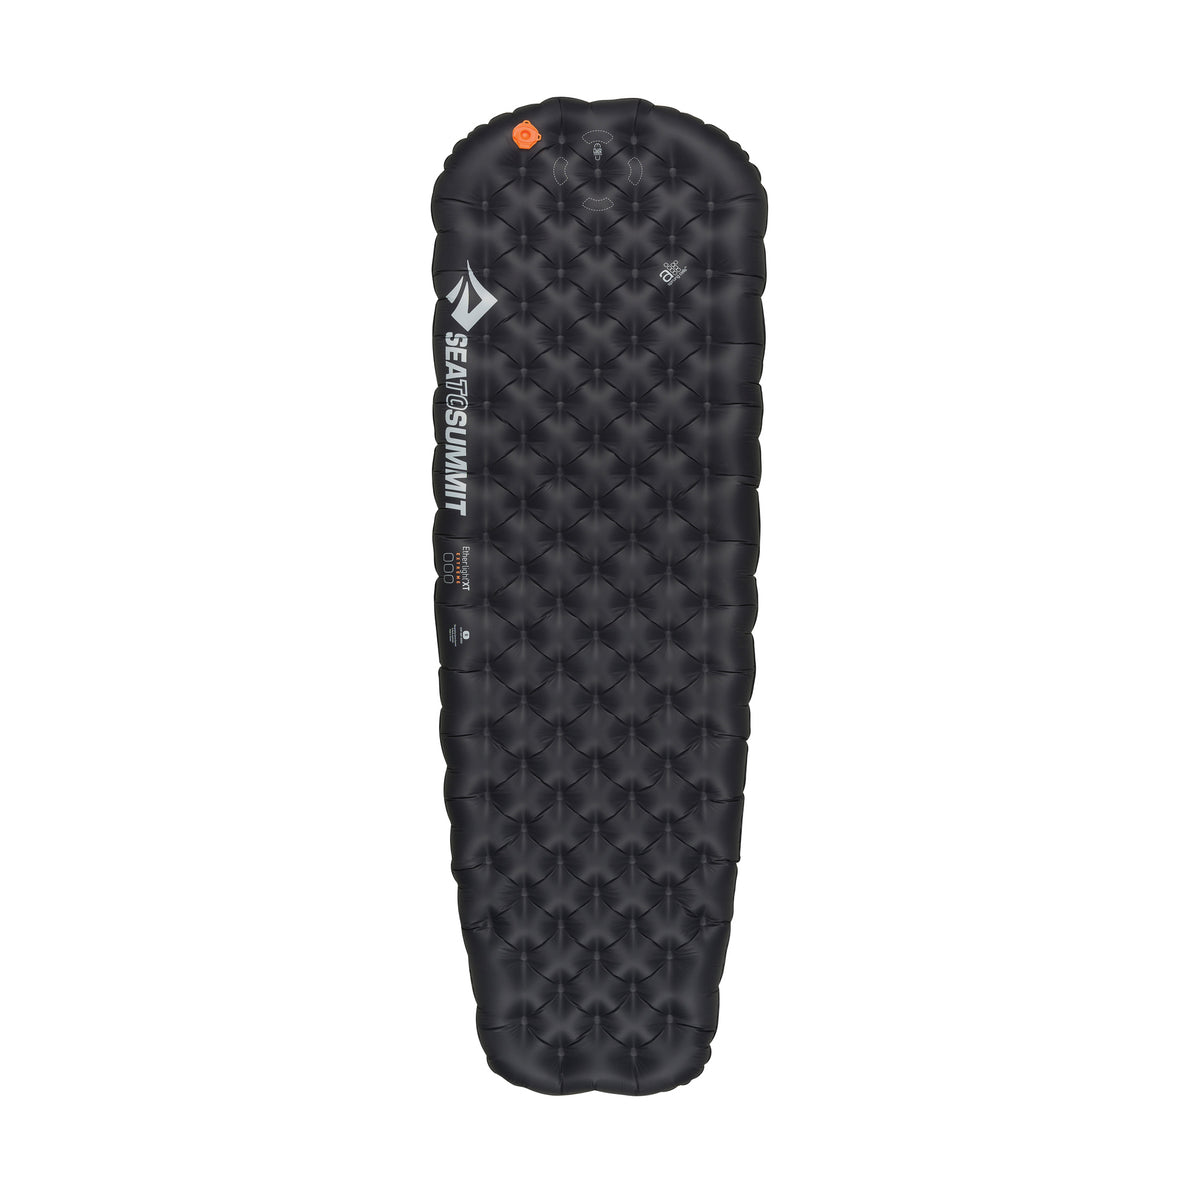 Regular || Ether Light XT Extreme Insulated Air Sleeping Pad